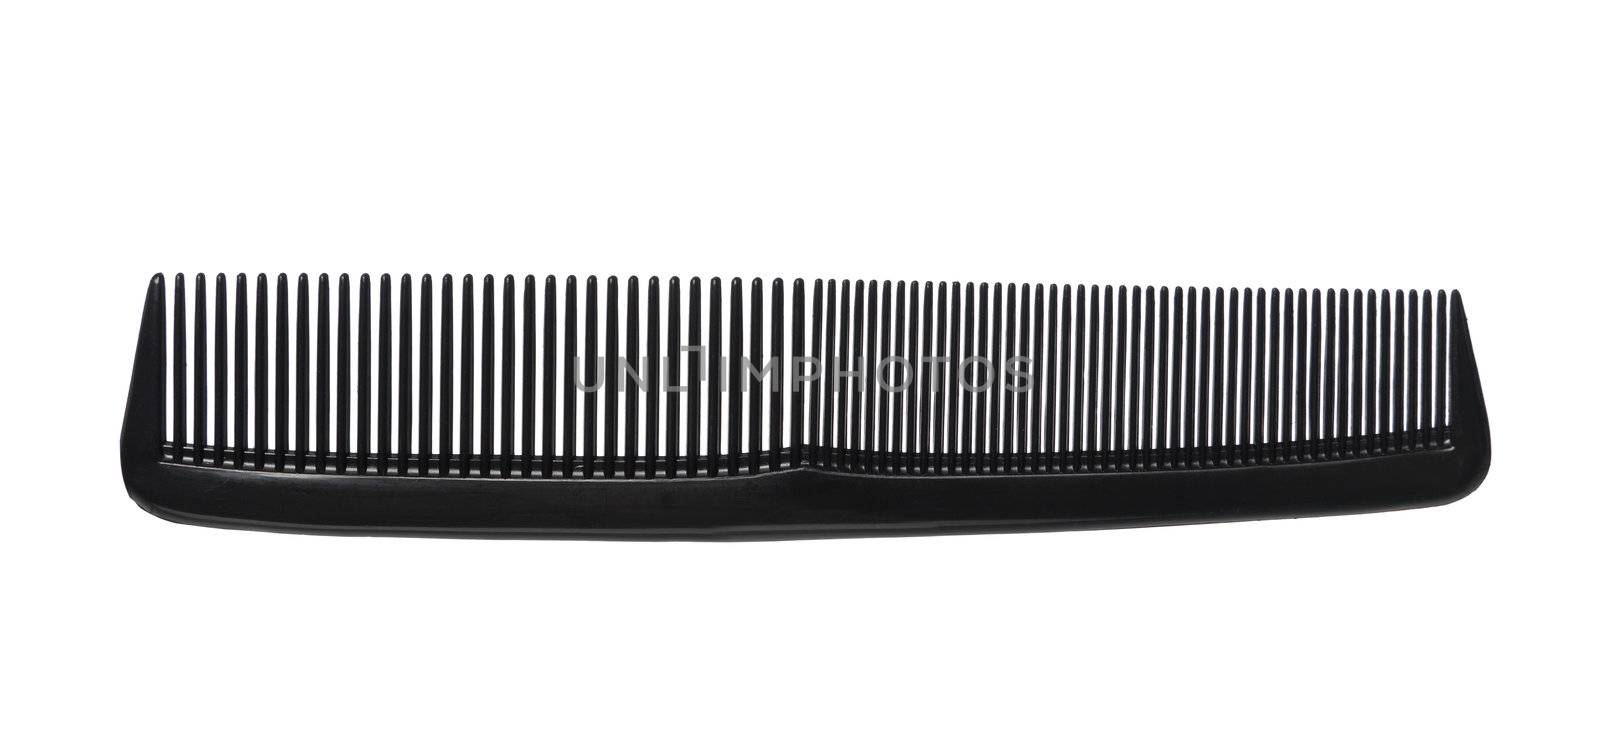 Black comb by gemenacom